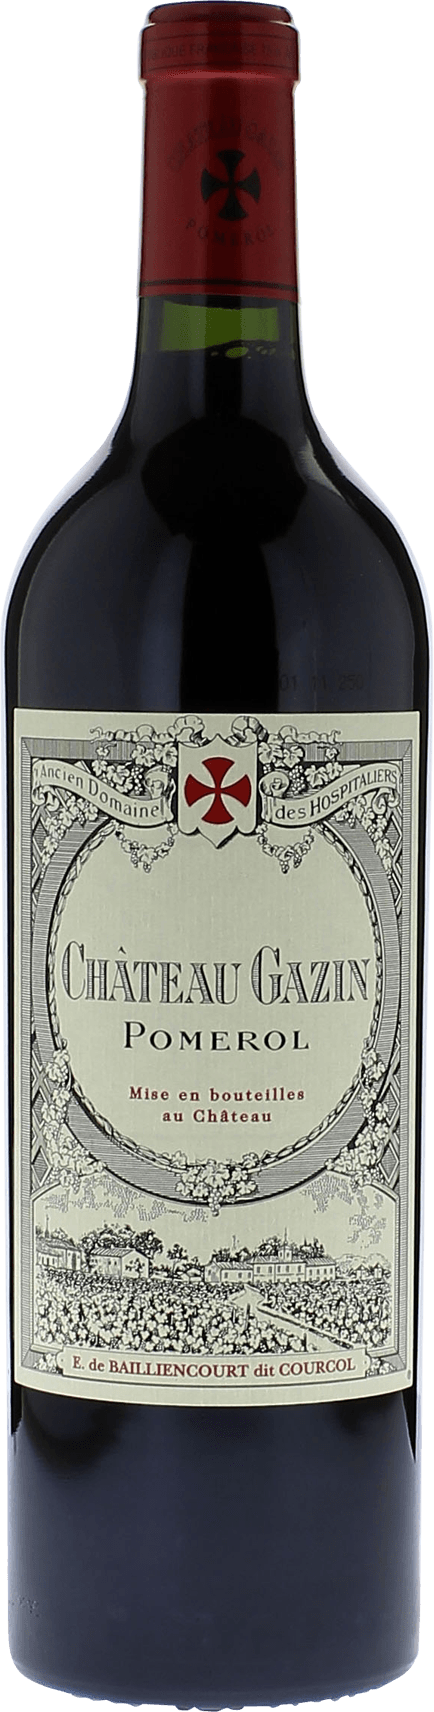 Gazin 1981  Pomerol, Bordeaux rouge